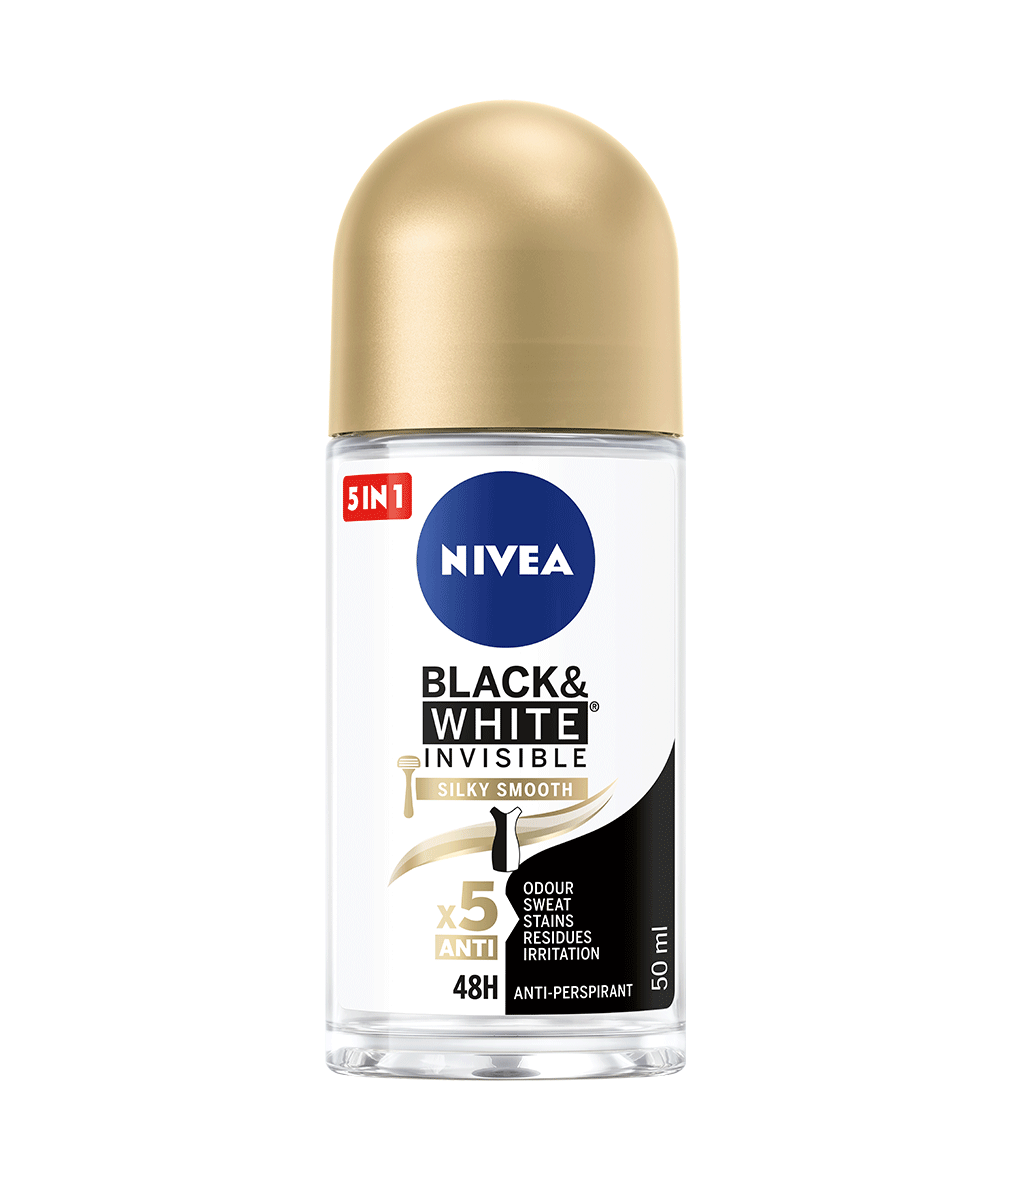 Nivea Black & White Invisible Silky Smooth Anti-Perspirant